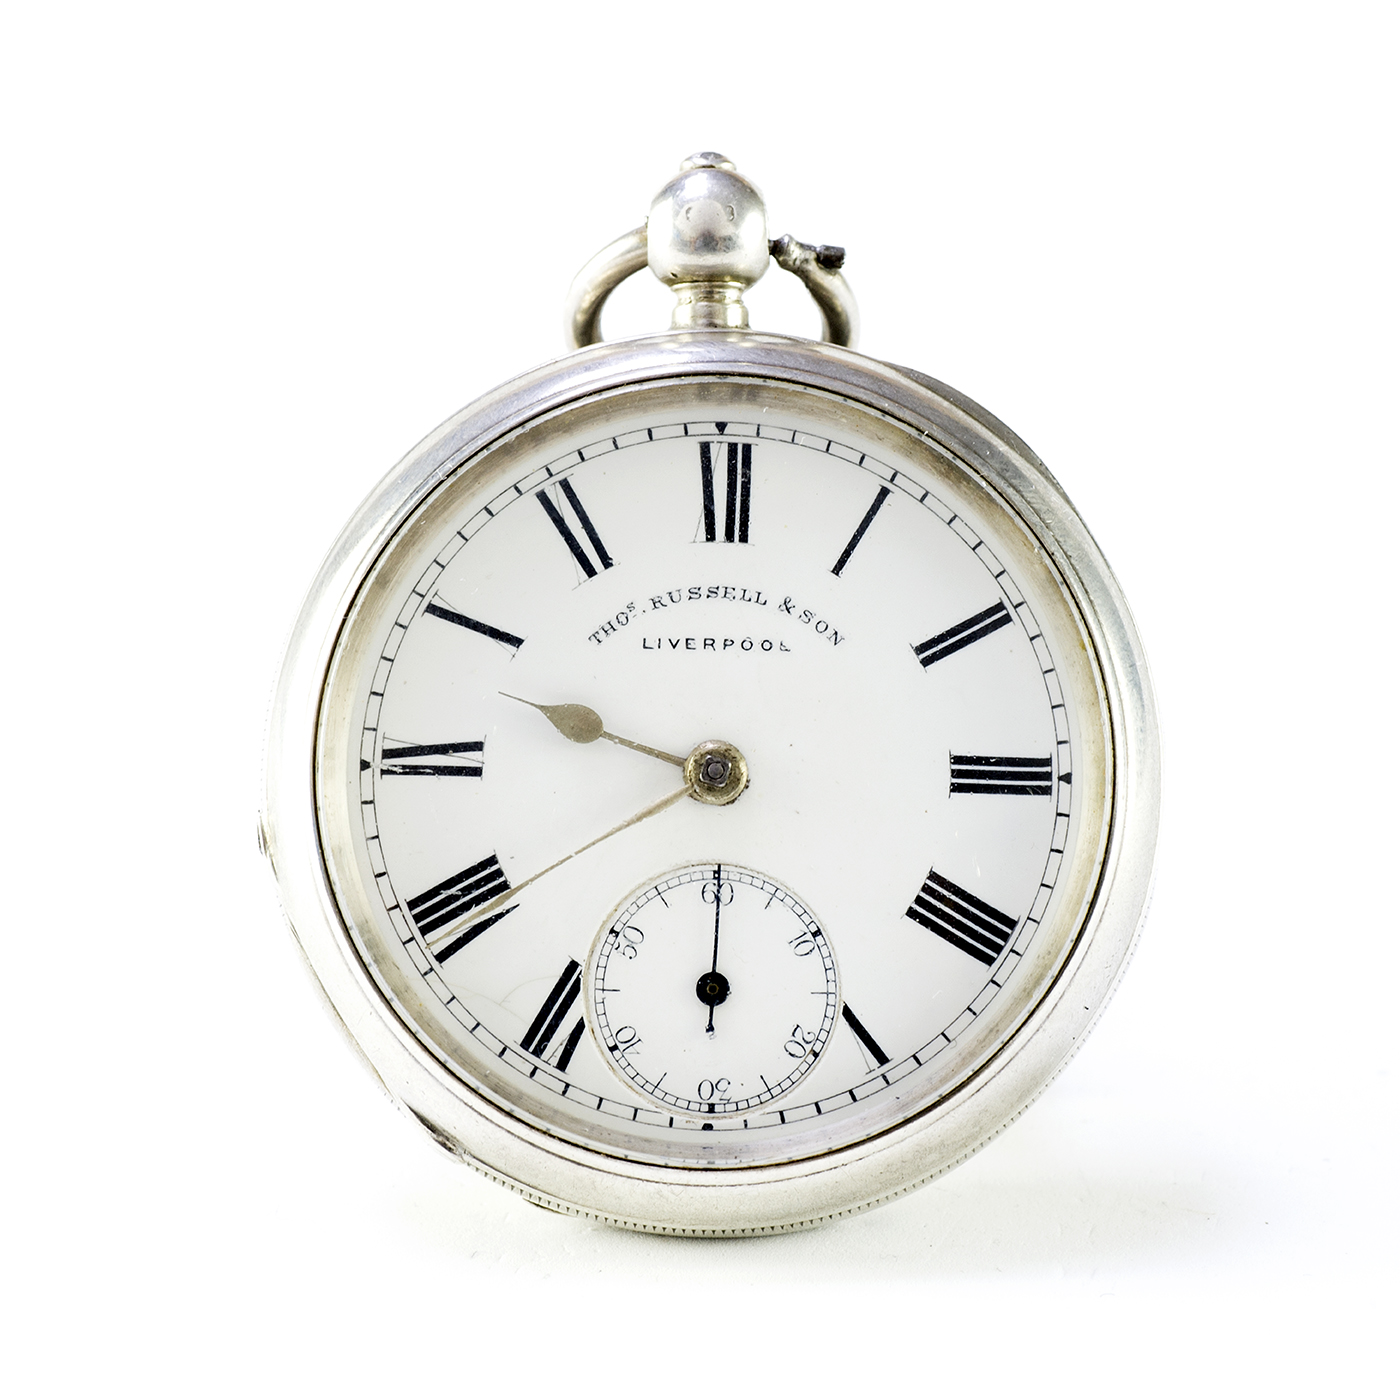 THOS.RUSSELL & SON (Liverpool). Reloj de bolsillo, lepine. Liverpool, 1898